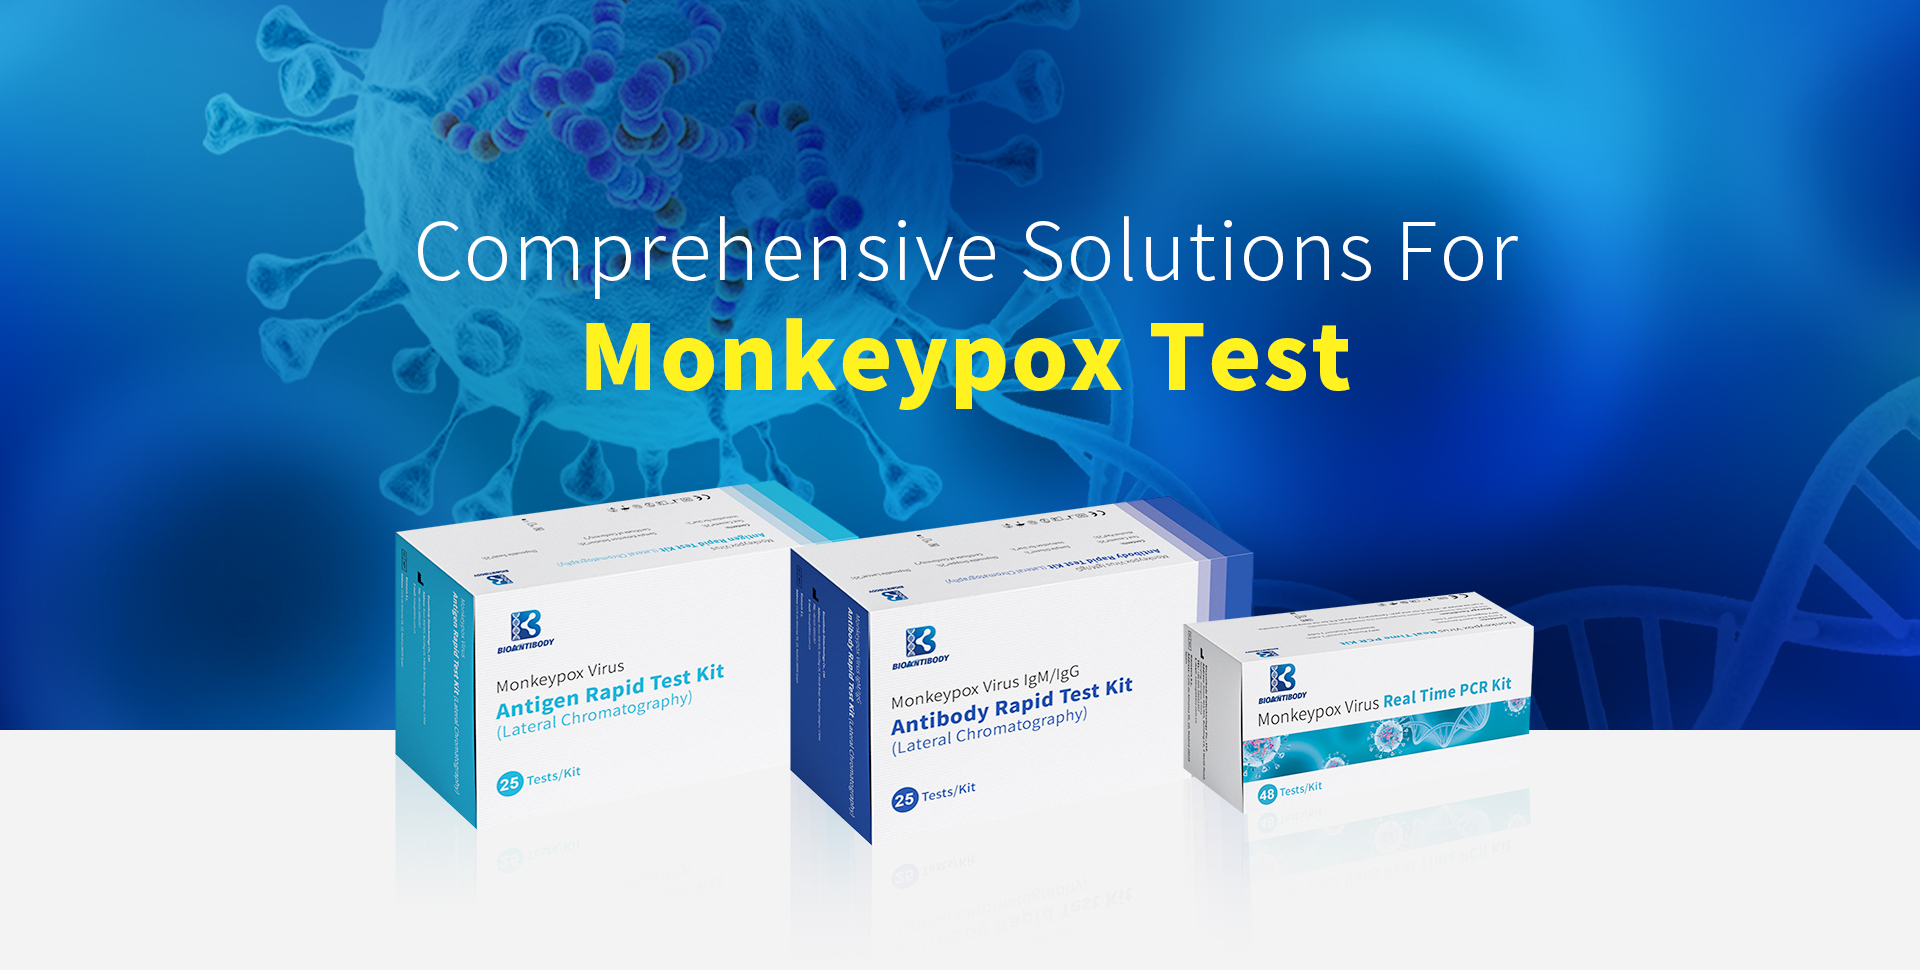 Monkeypox Virus test kits